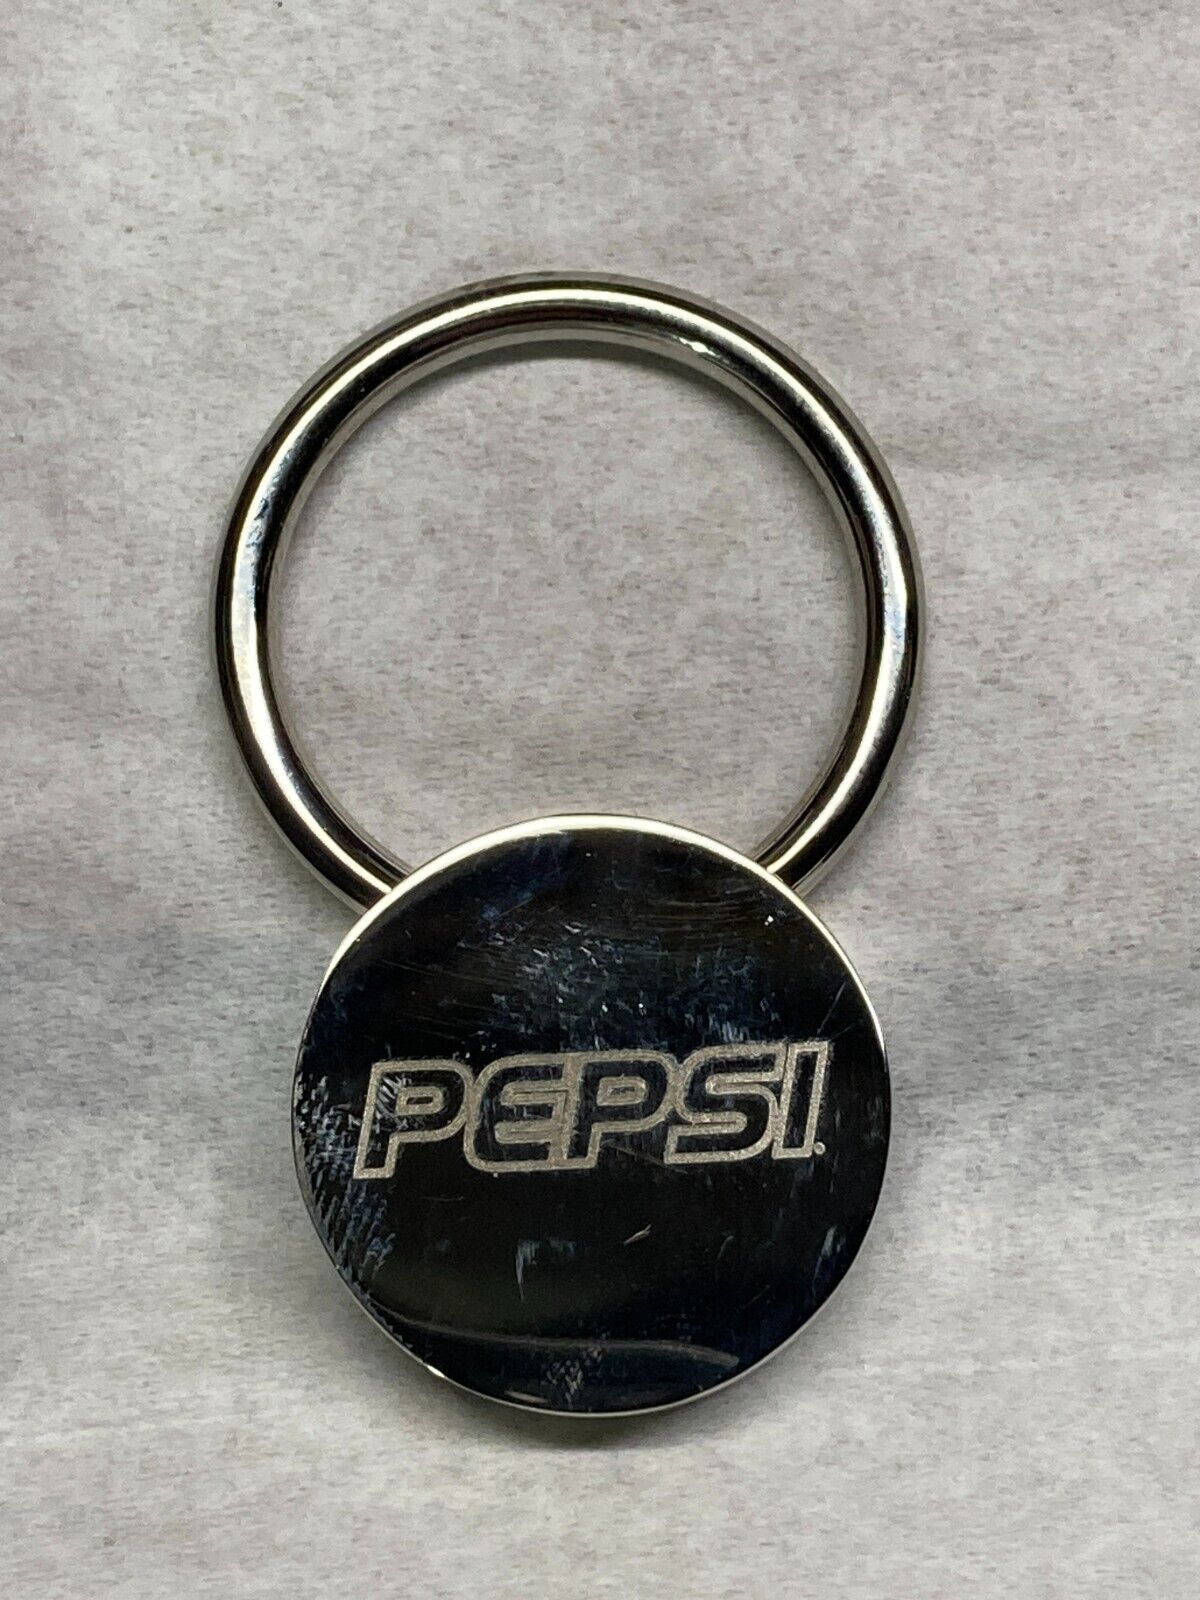 PEPSI Chrome Promotional Key Chain Ring Vintage 1990's NEW w/Display Box RARE